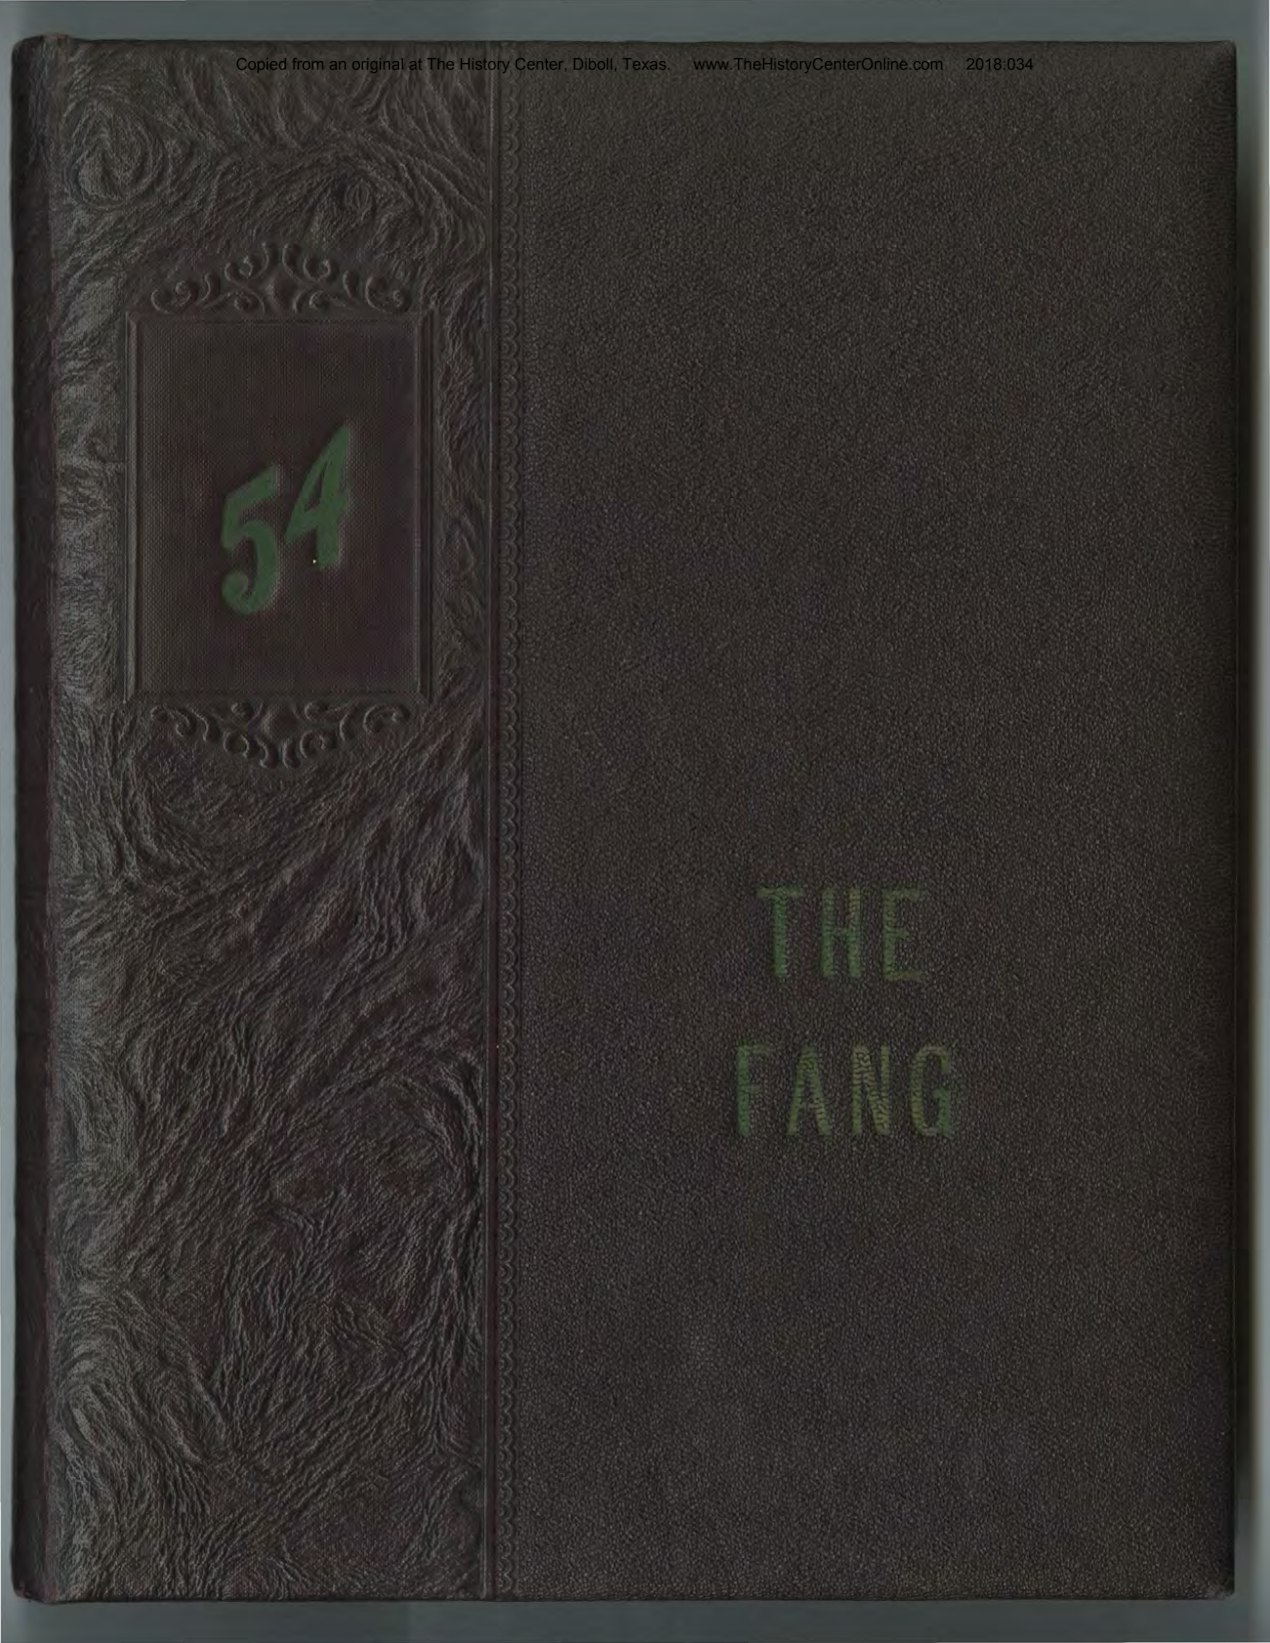 1954 Fang (Lufkin)